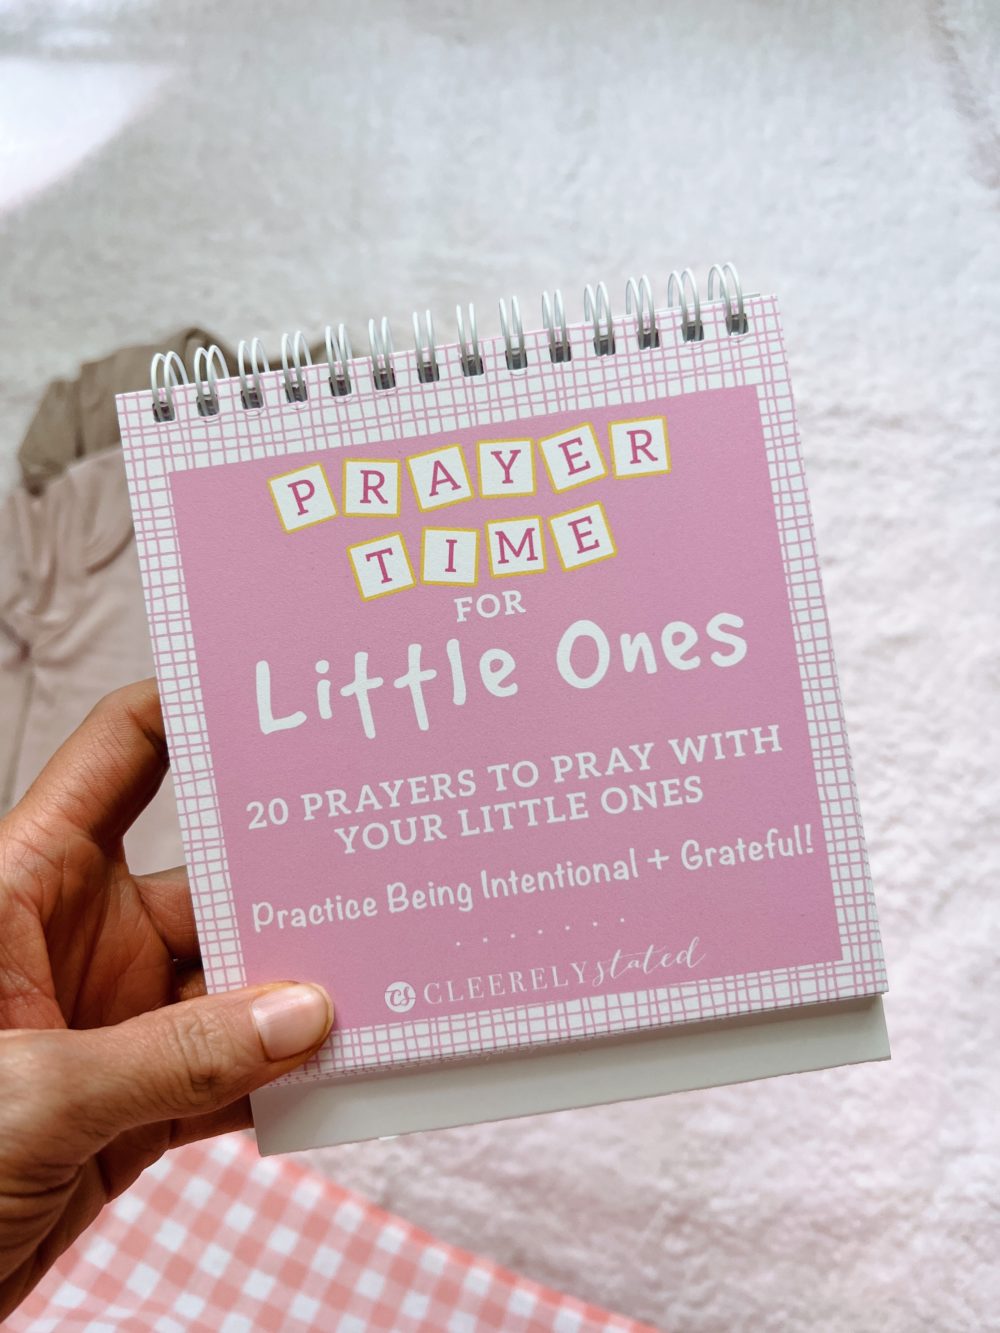 brighton butler nursery sneak peek baby girl, prayer time for littles by Cleerly Stated